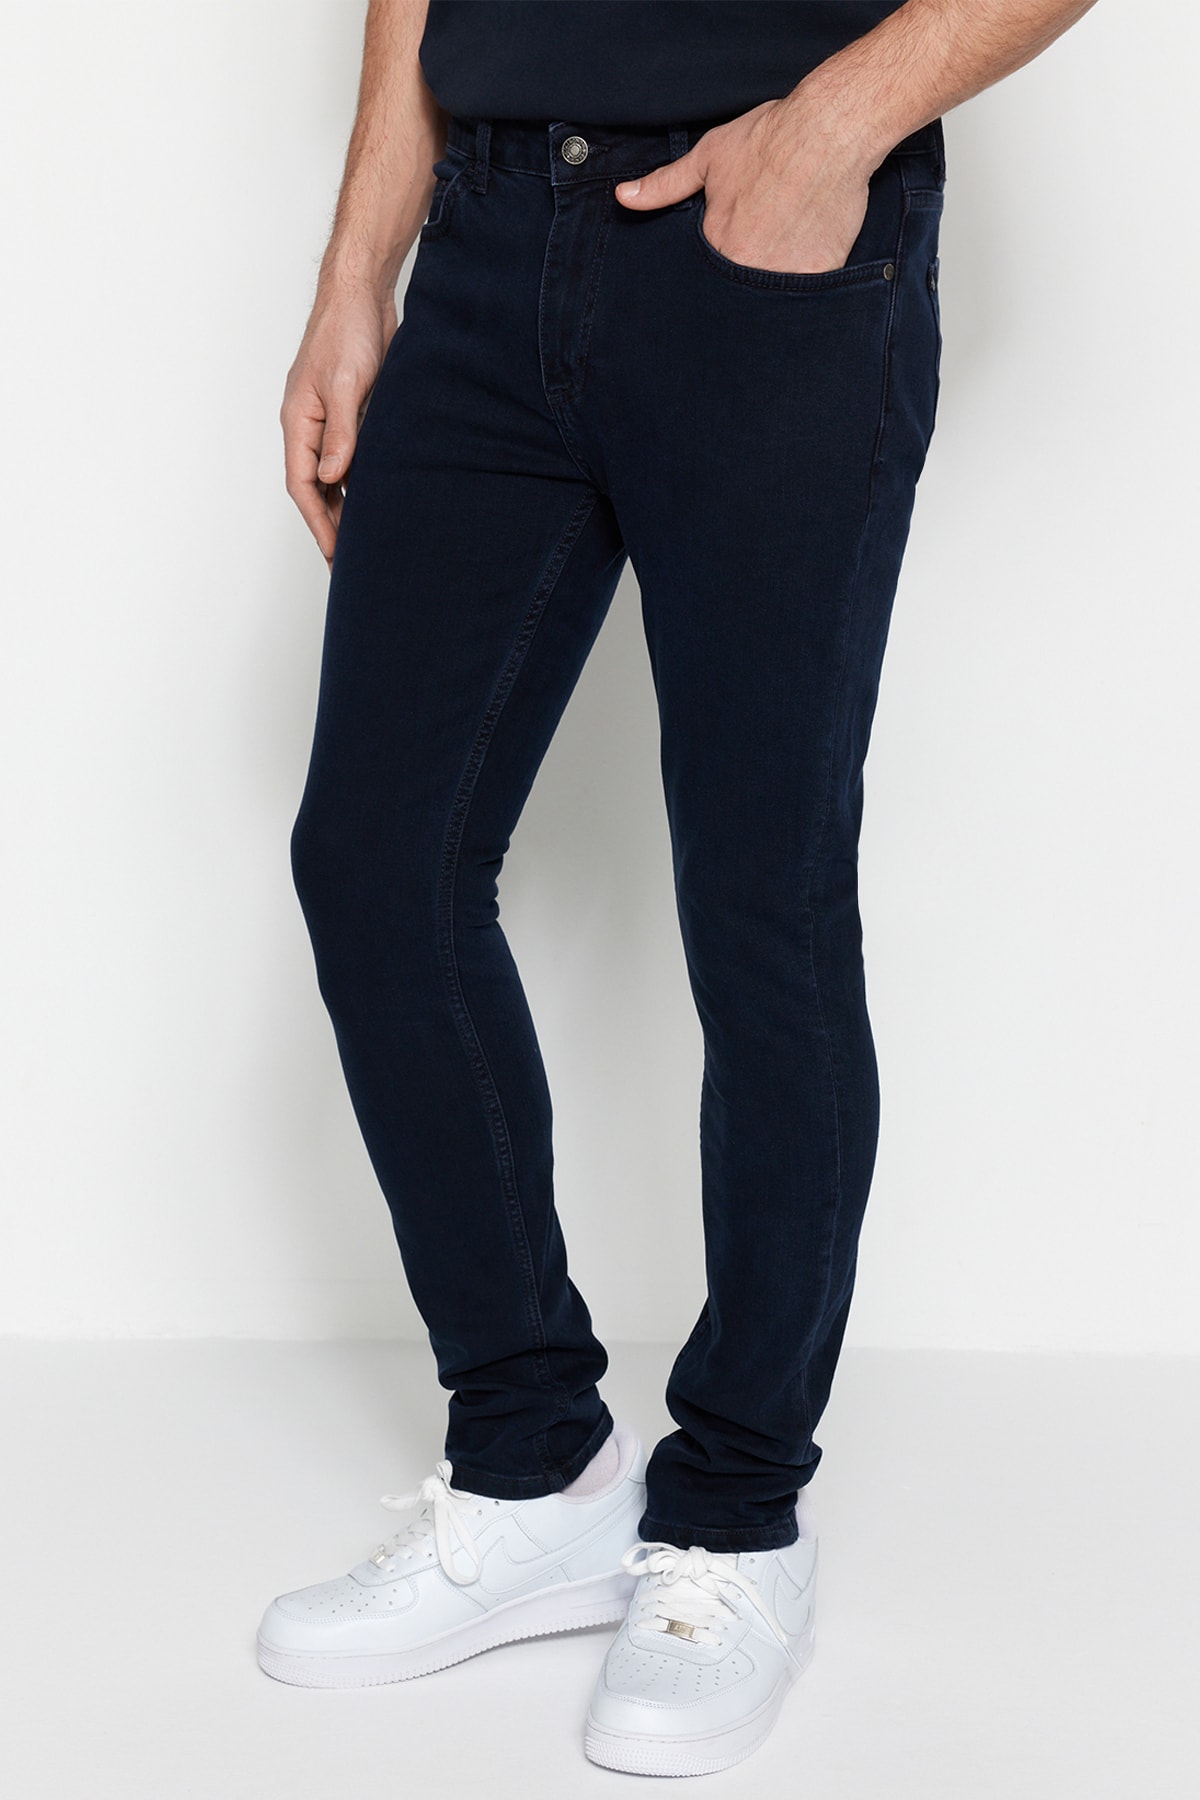 Trendyol Dark Navy Blue Premium Stretchy Fabric Skinny Fit Jeans Denim Trousers